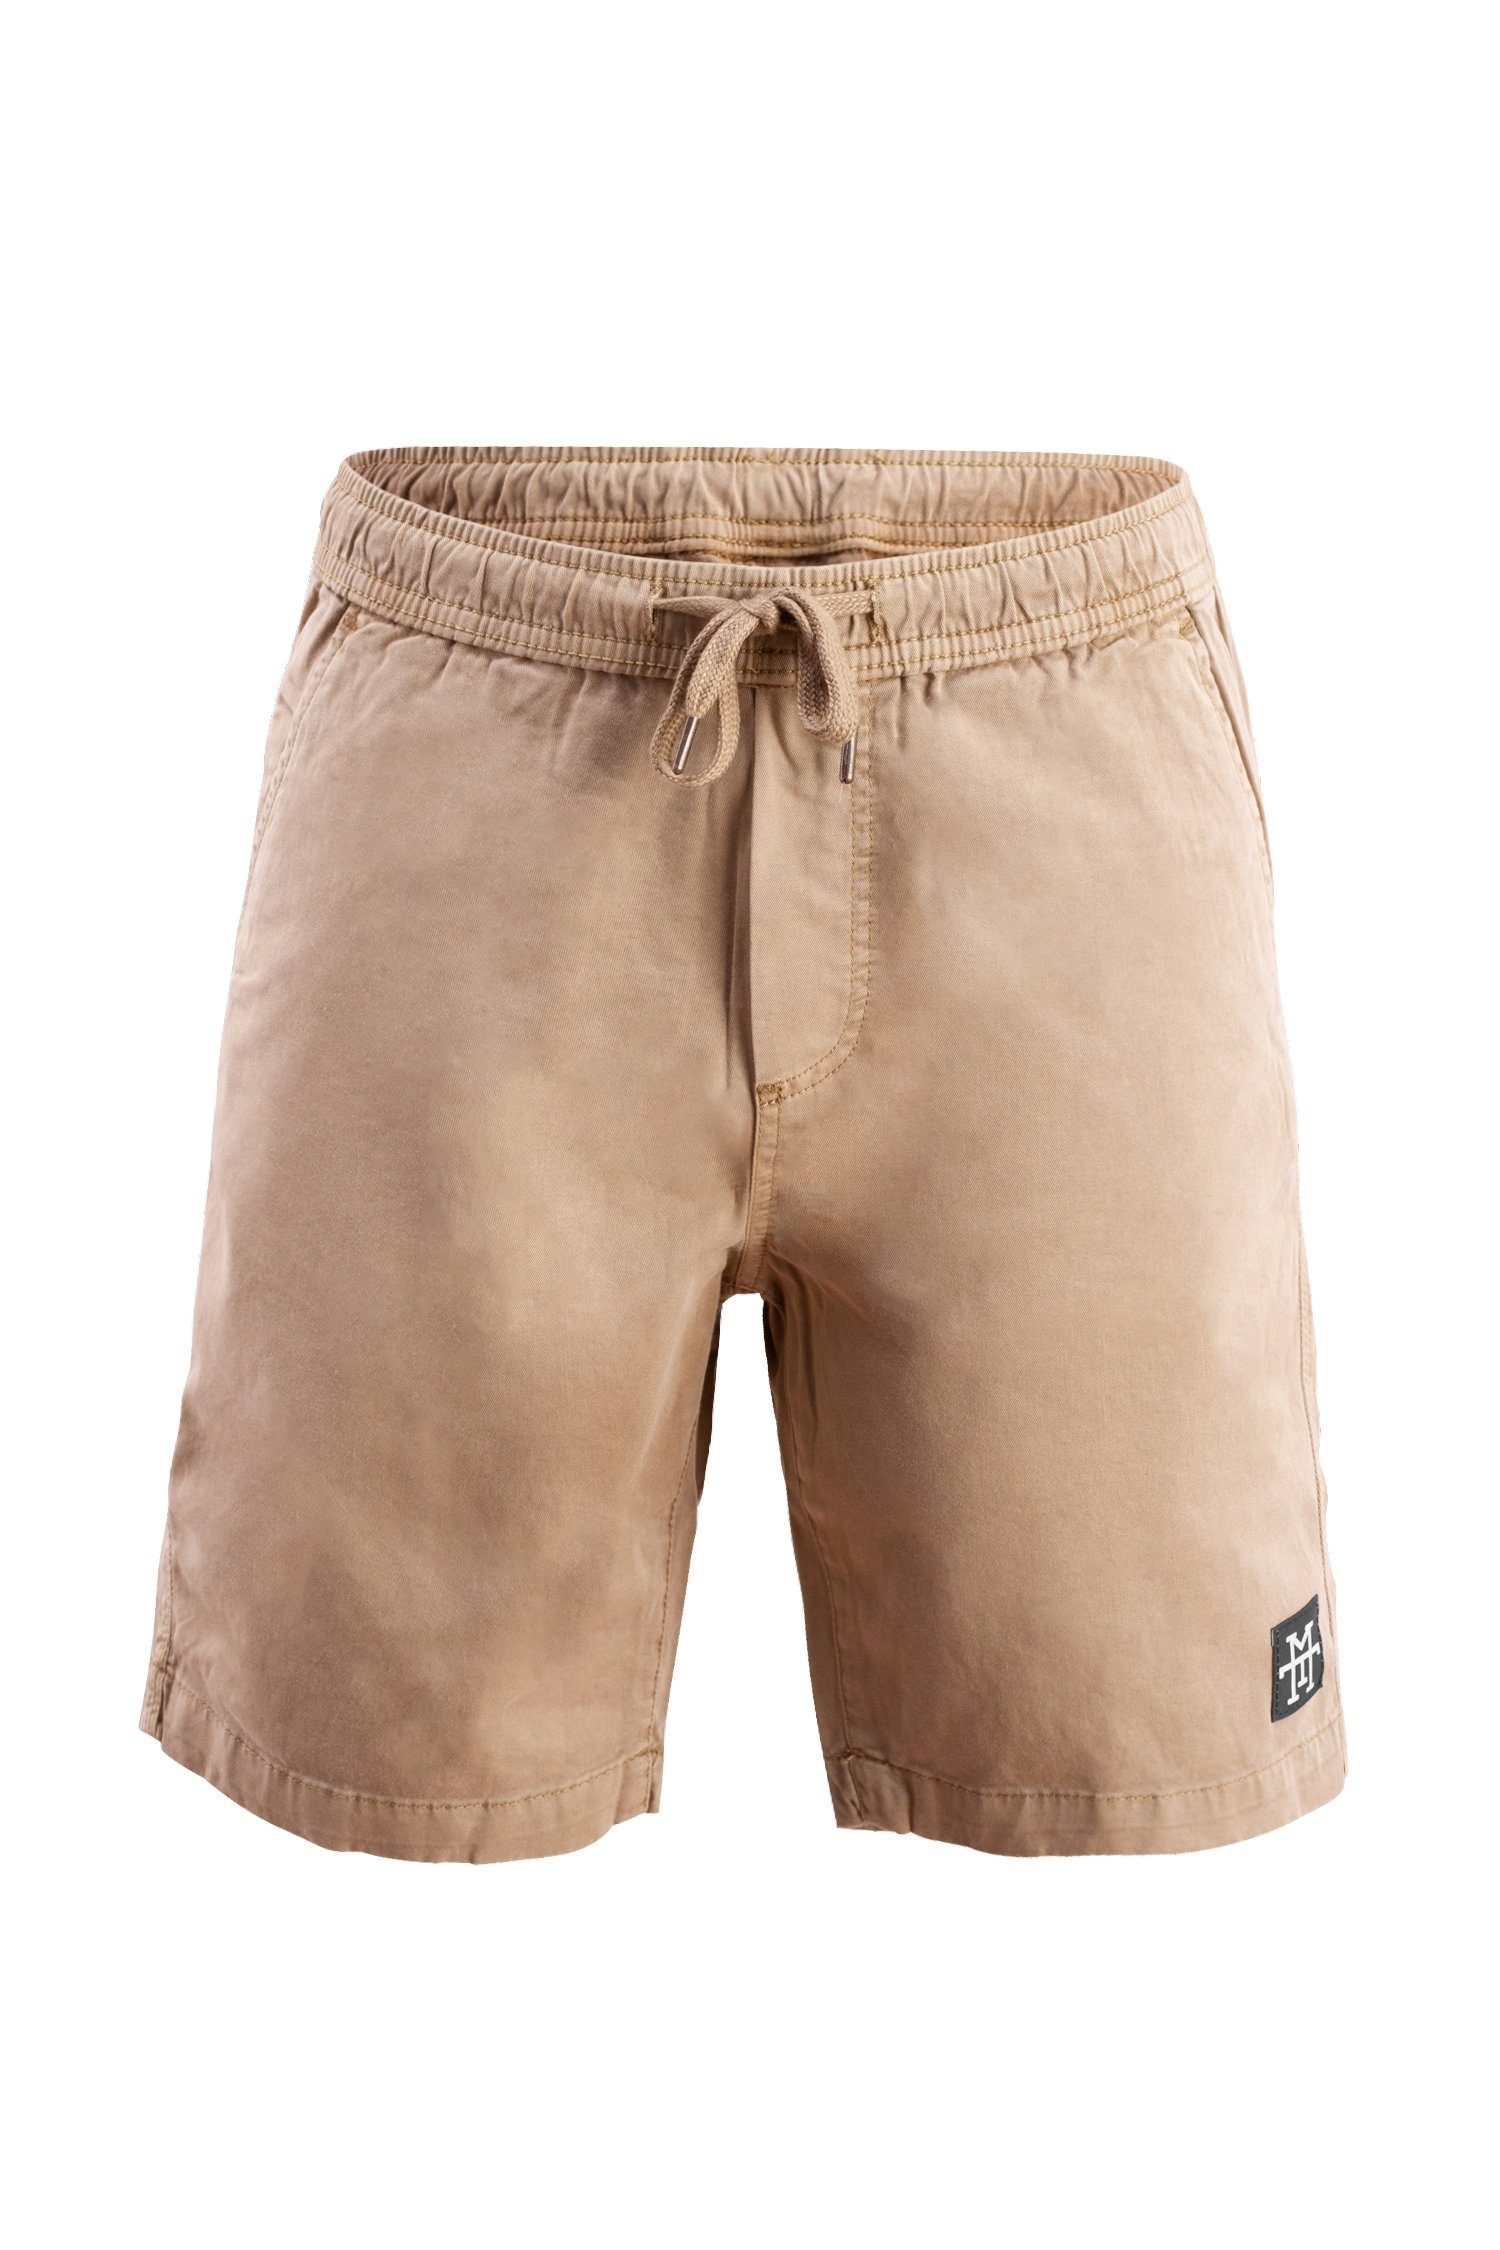 Manufaktur13 Chinoshorts Chino Shorts - Kurze Hose aus dehnbarem Stretch Twill mit Kordelzug / Tunnelzug Sand